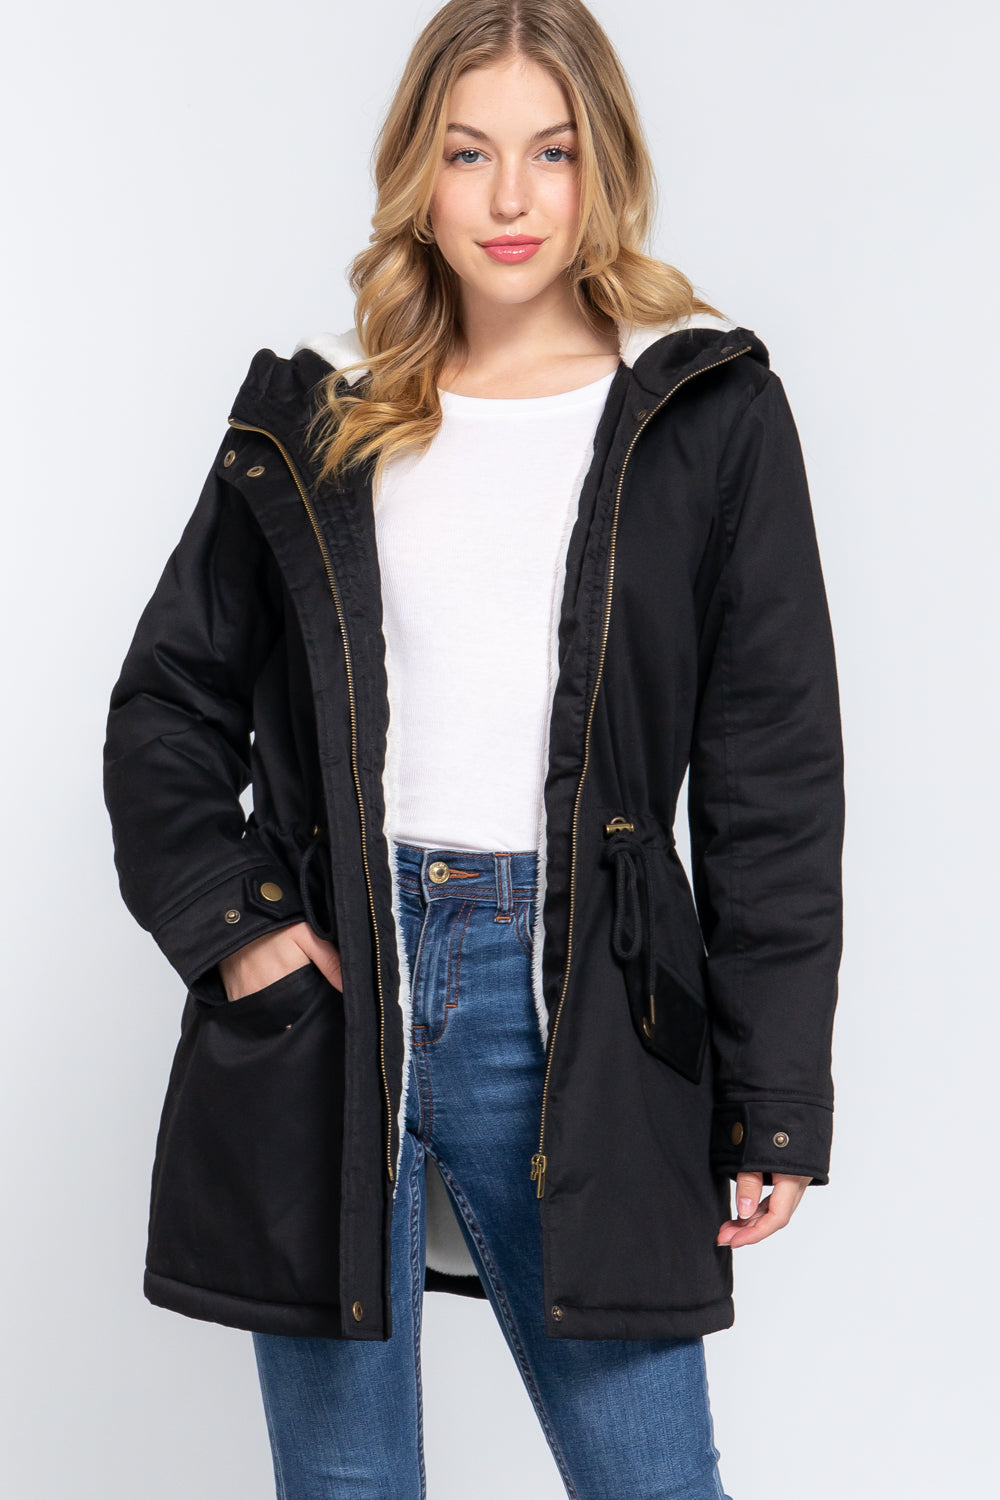 Black S Fleece Lined Fur Hoodie Utility Jacket - 4 colors - women's jacket at TFC&H Co.